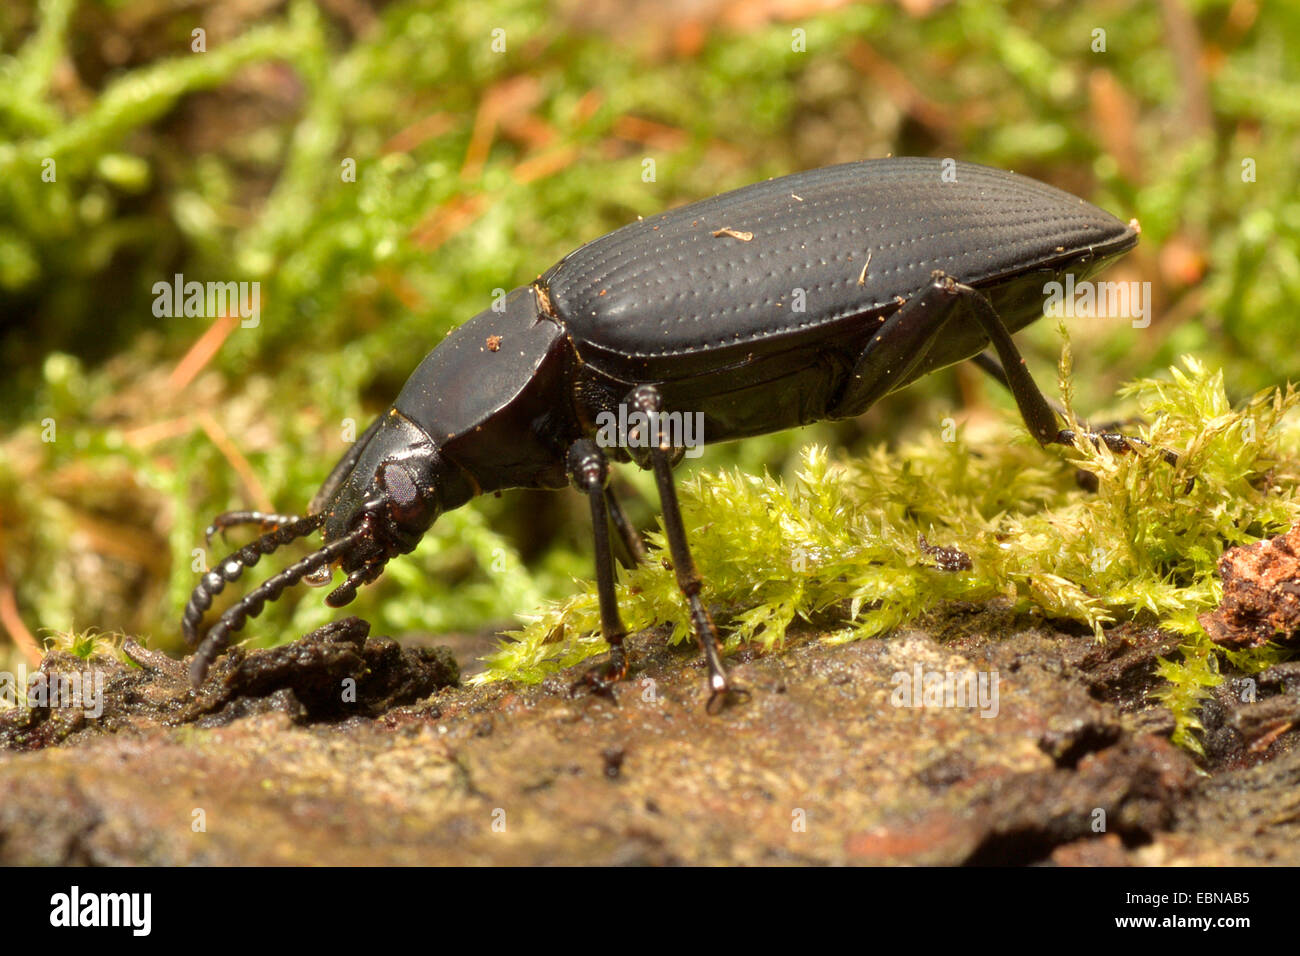 Kingworm, Superworm, Darkling Beetle (Zophobas morio), side view Stock Photo